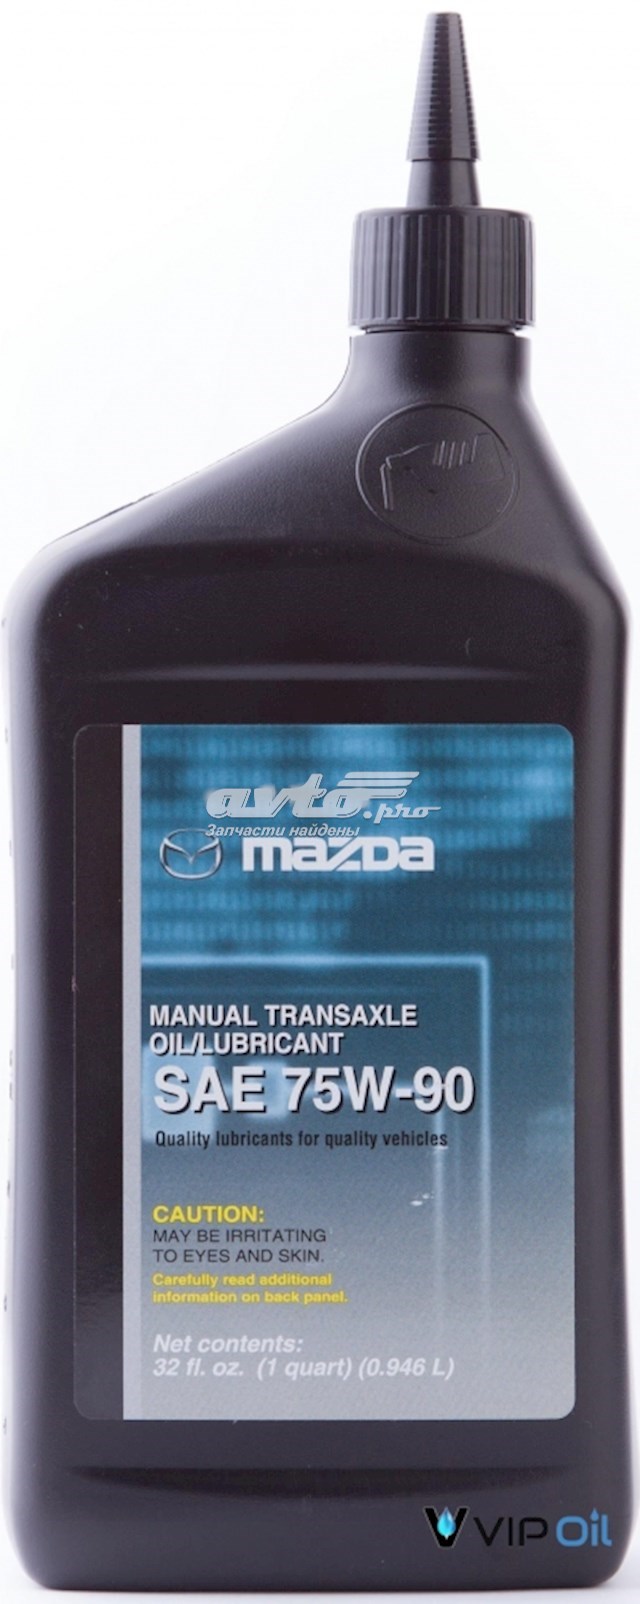 Aceite transmisión MAZDA 0000775W90QT